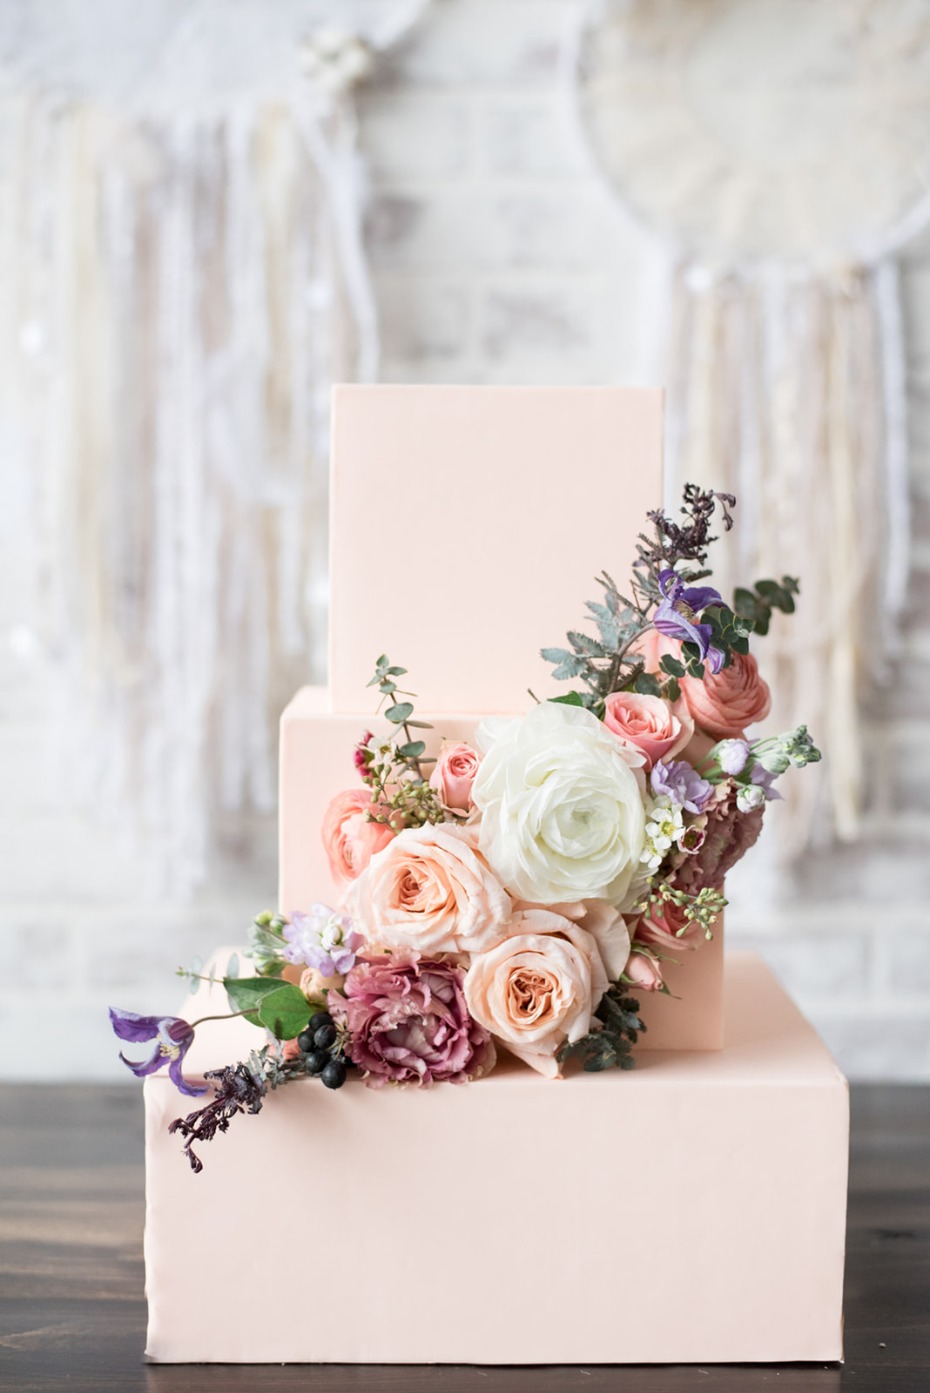 Blush square wedding cake with flowers